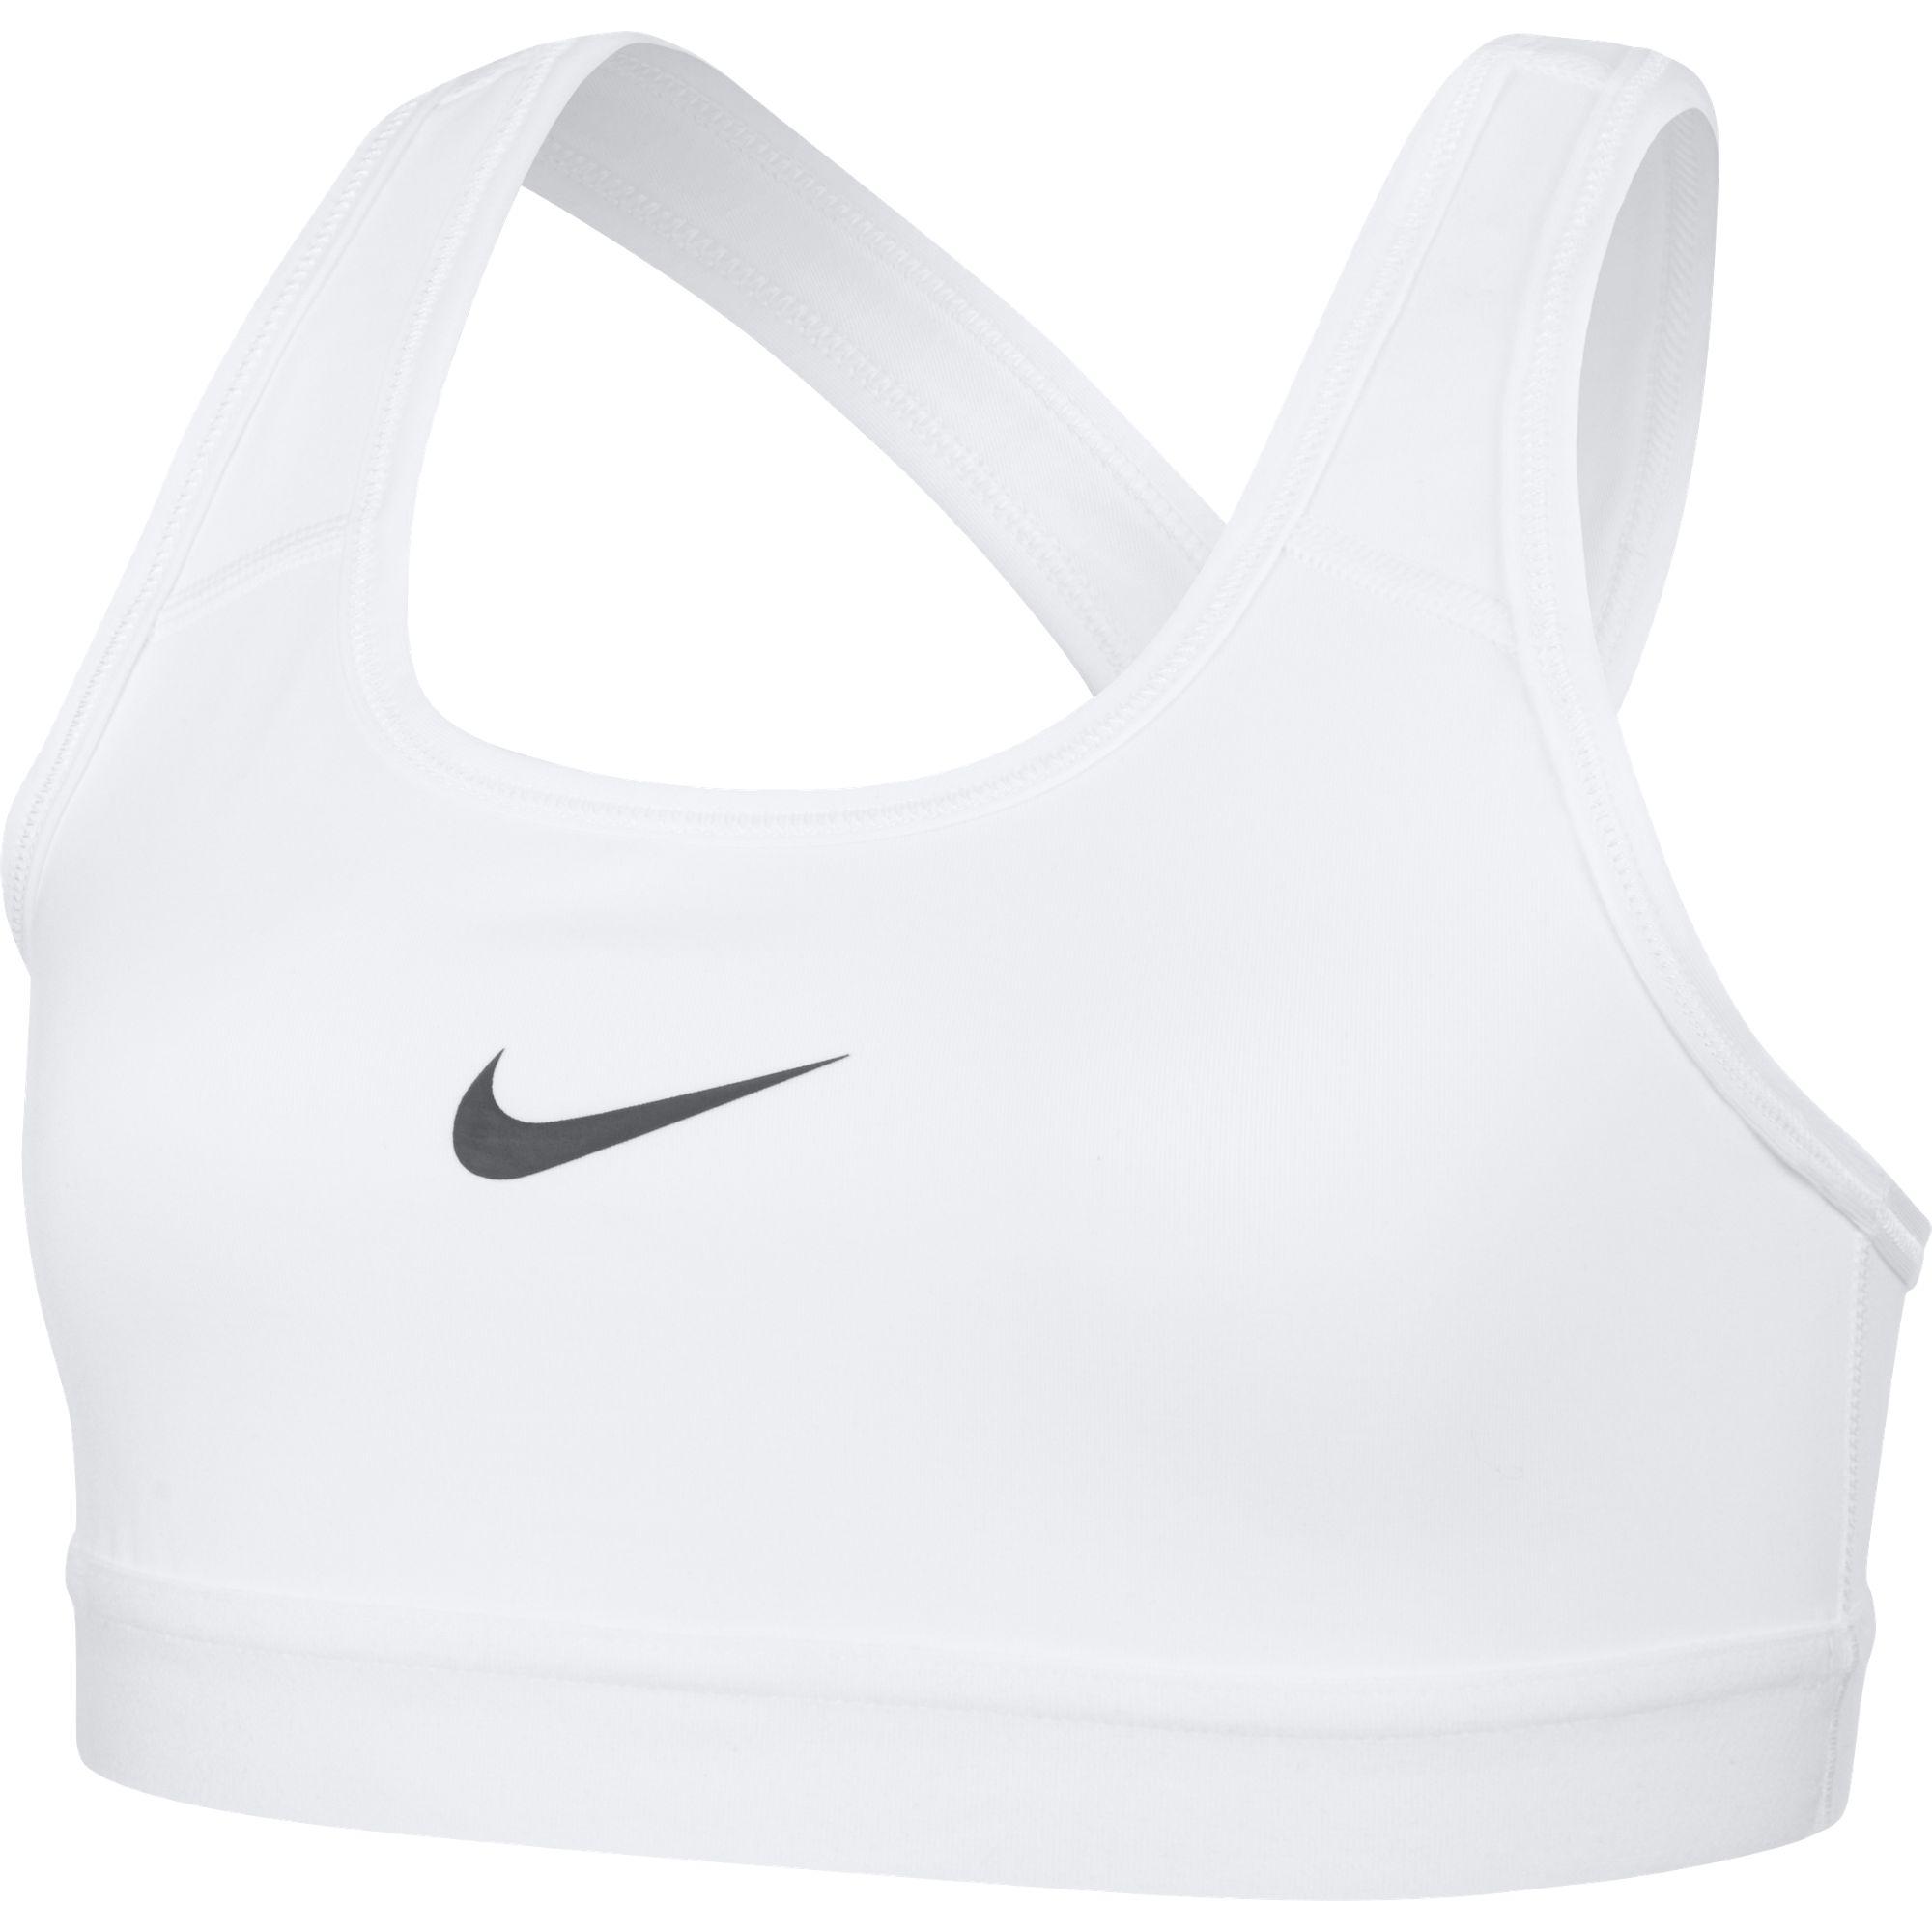 Nike Girls Pro Sports Bra - White 